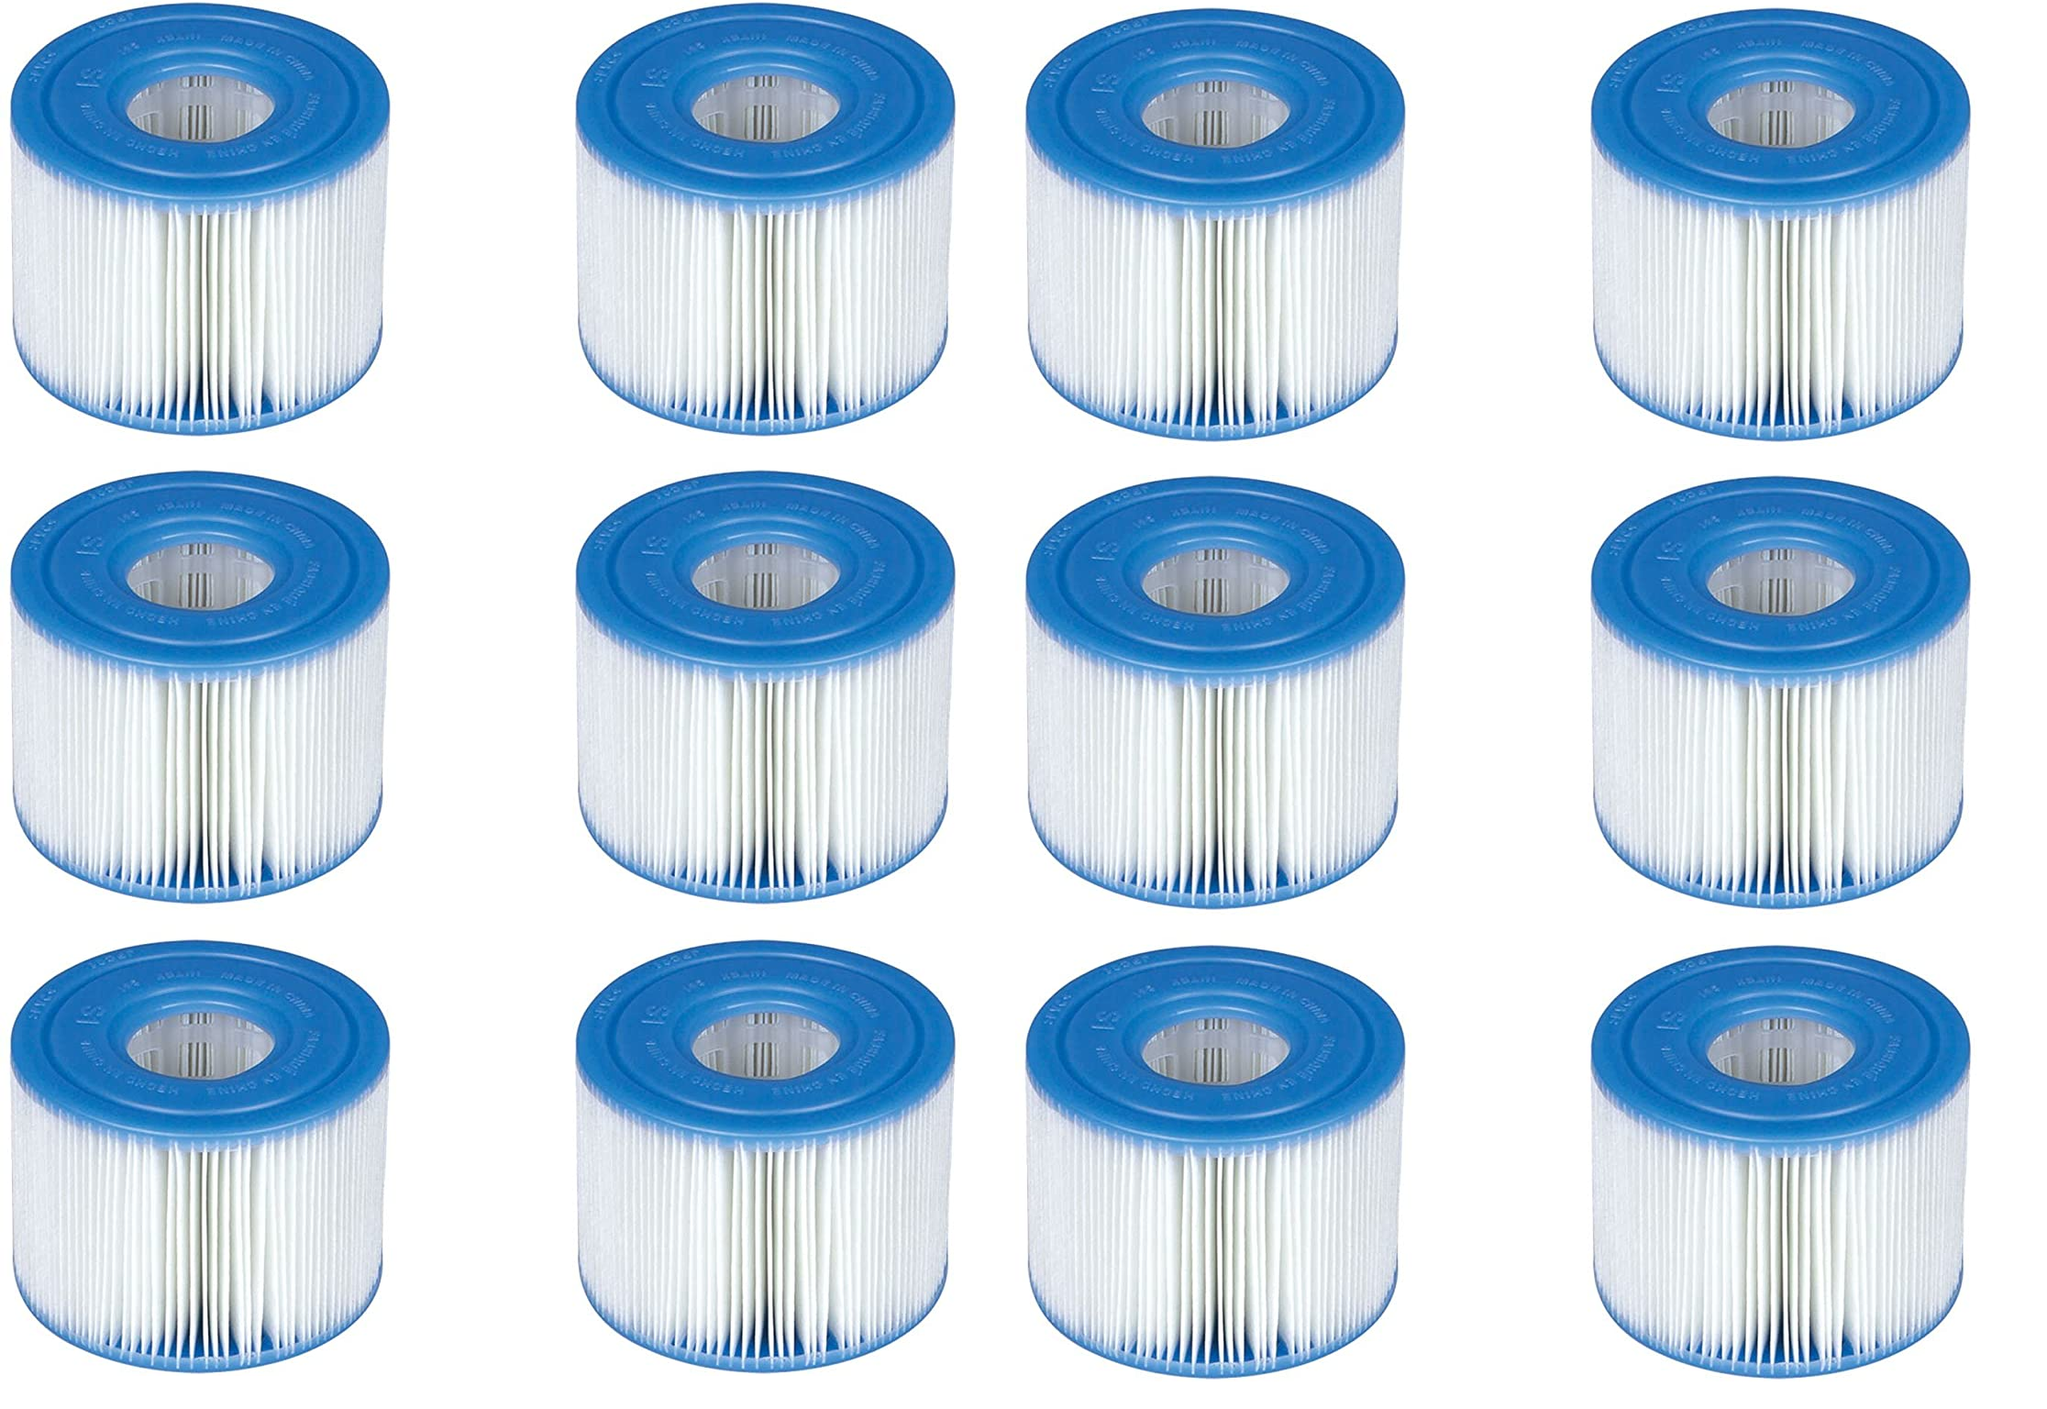 nemen blauwe vinvis geduldig Intex Voordeelpack - Filters voor de Intex Spa Type S1 12 stuks (Opblaas  Jacuzzi 6 x 2 pack) | PS Toys